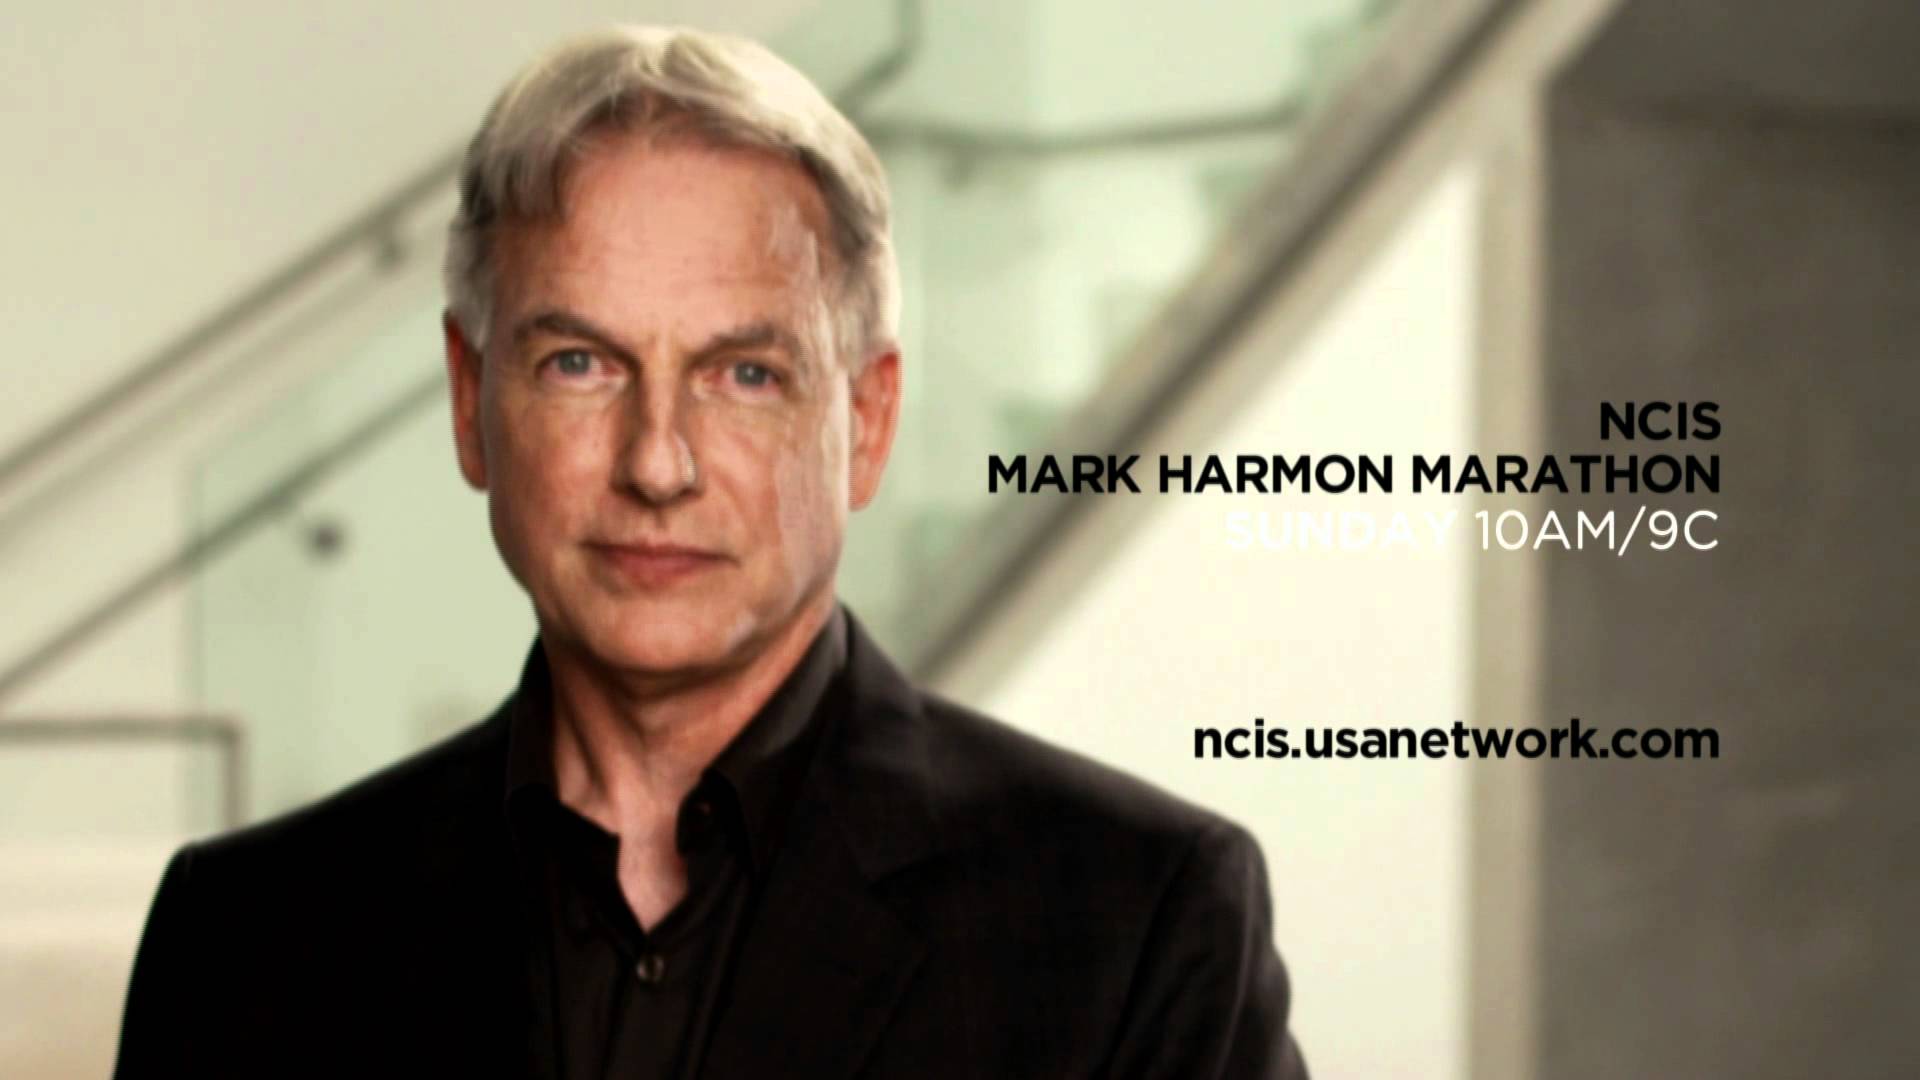 NCIS Promo with Mark Harmon